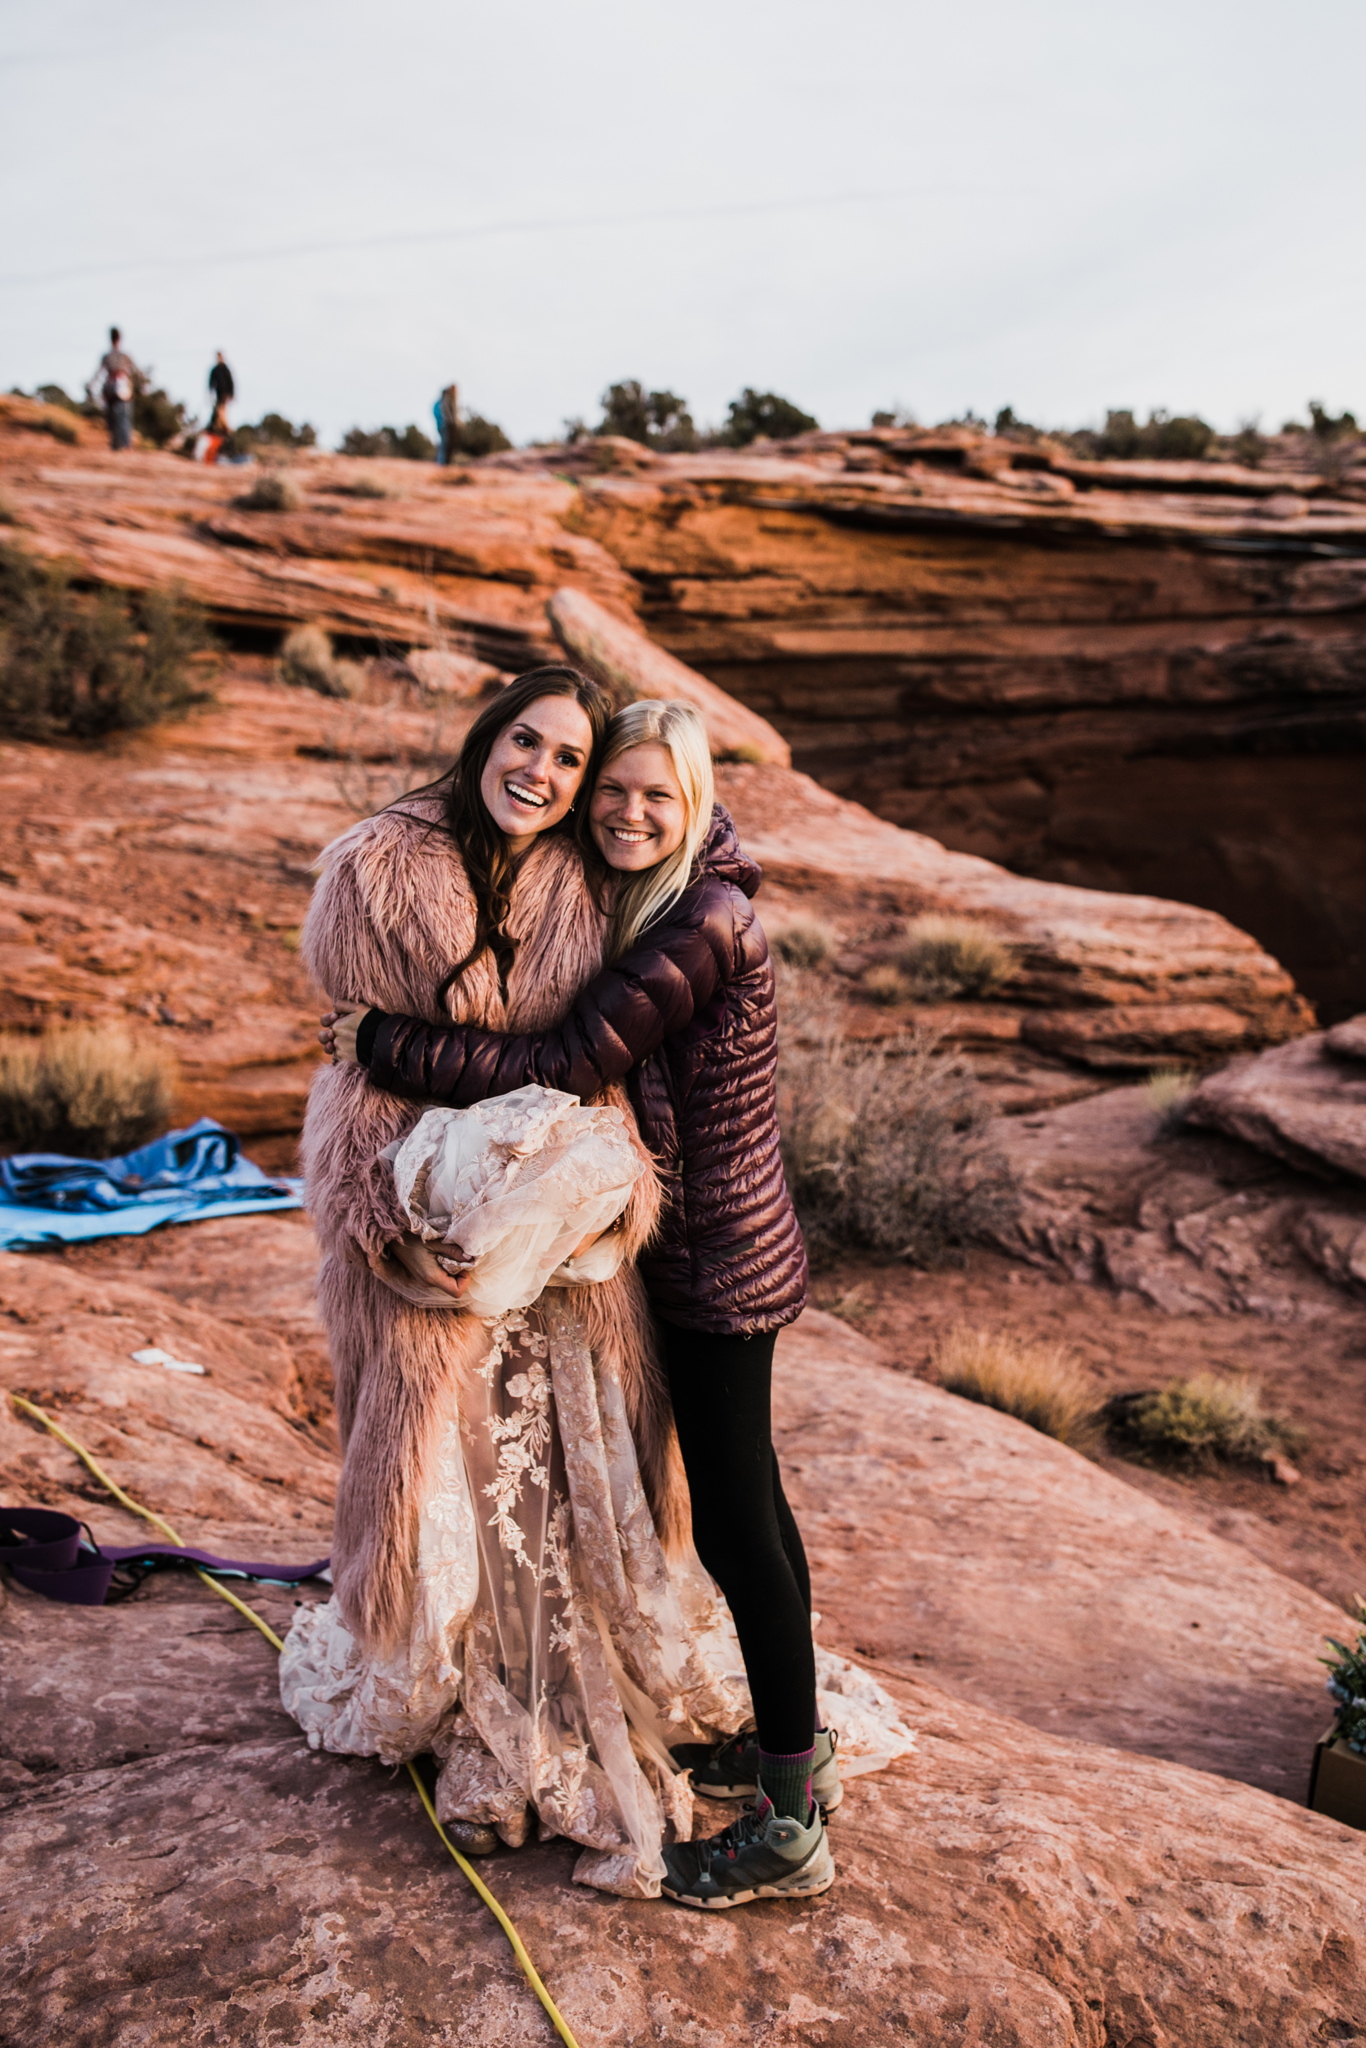 shooting a wedding in moab utah | utah and california adventure elopement photographers | the hearnes adventure photography | www.thehearnes.com